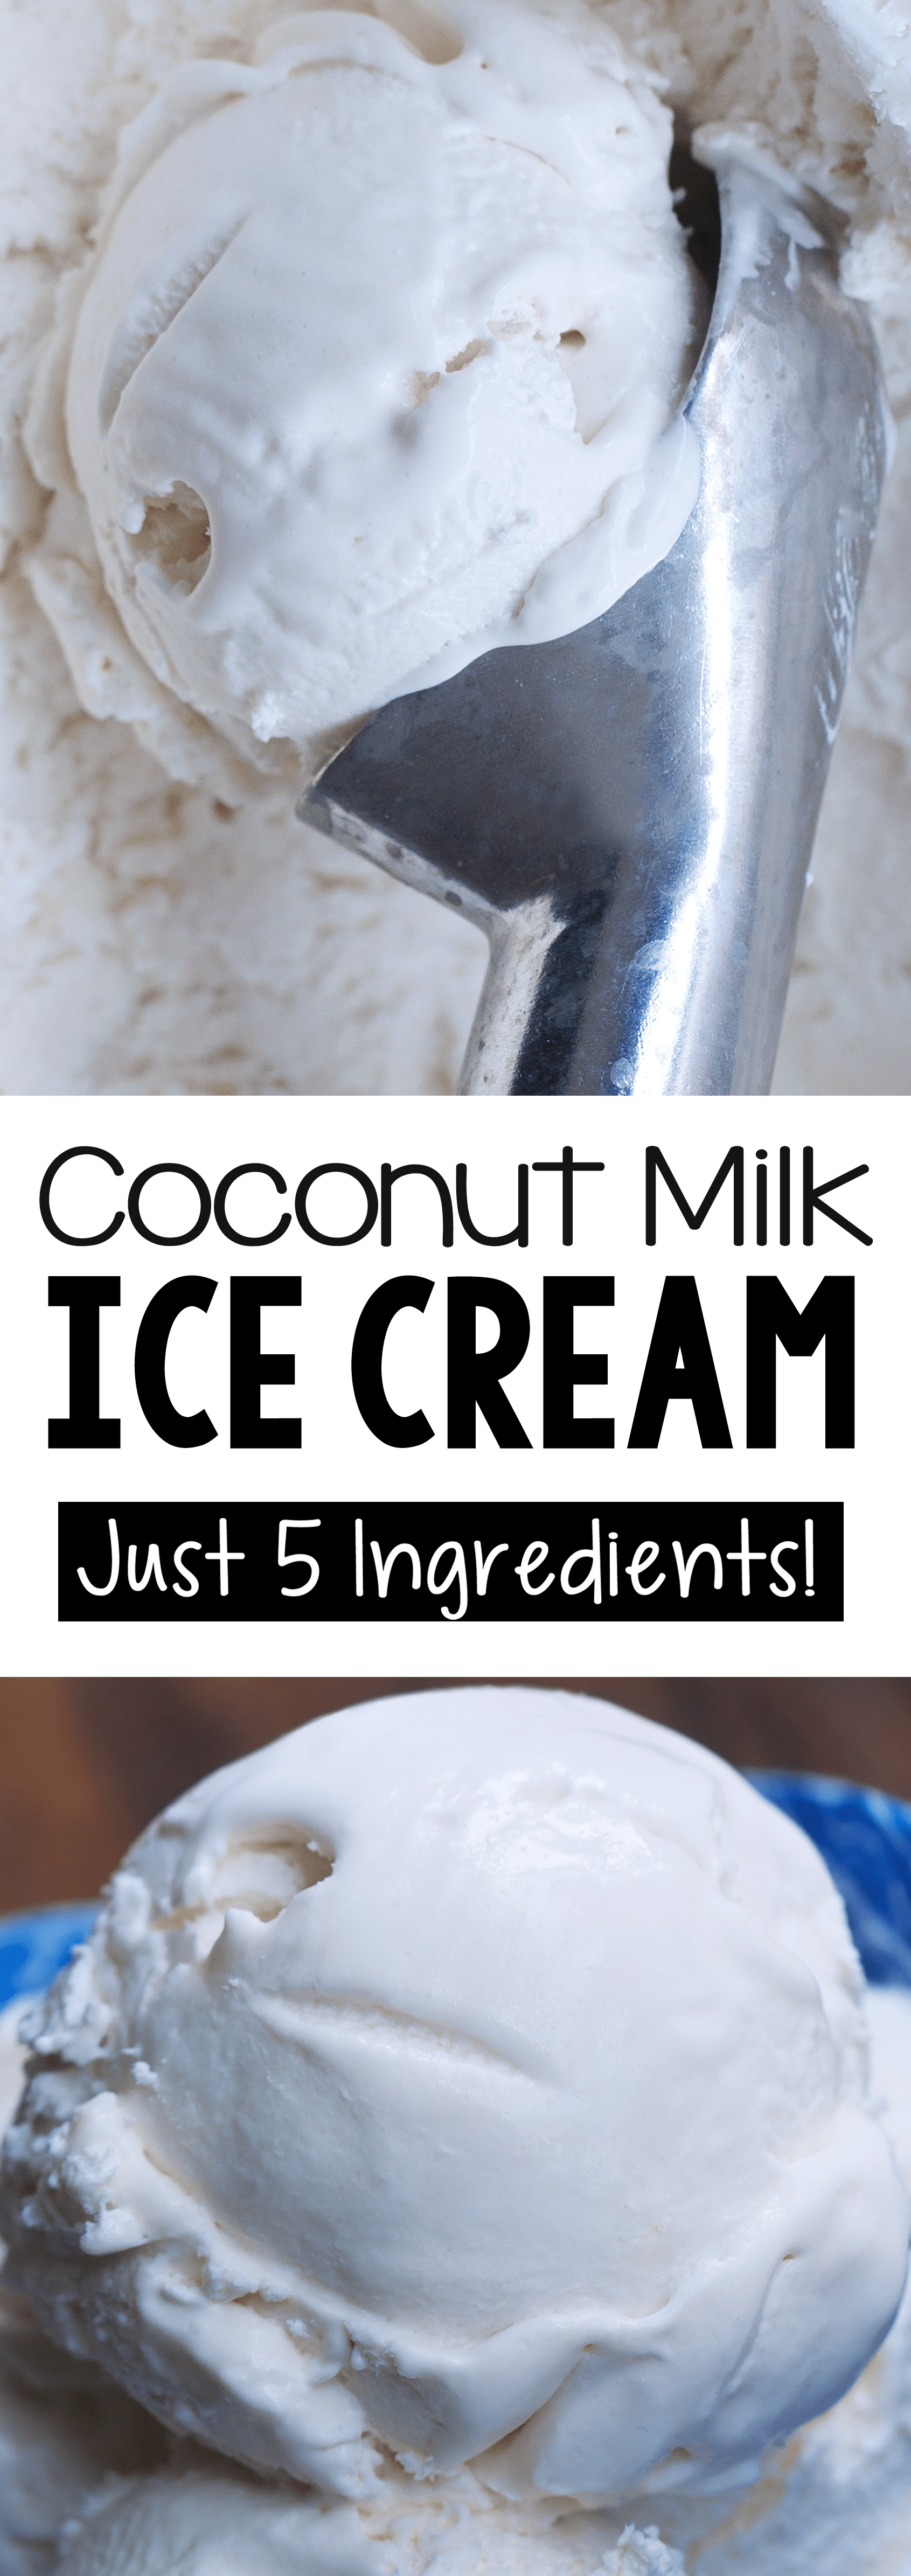 https://chocolatecoveredkatie.com/wp-content/uploads/2017/05/How-to-make-homemade-creamy-coconut-milk-ice-cream.png